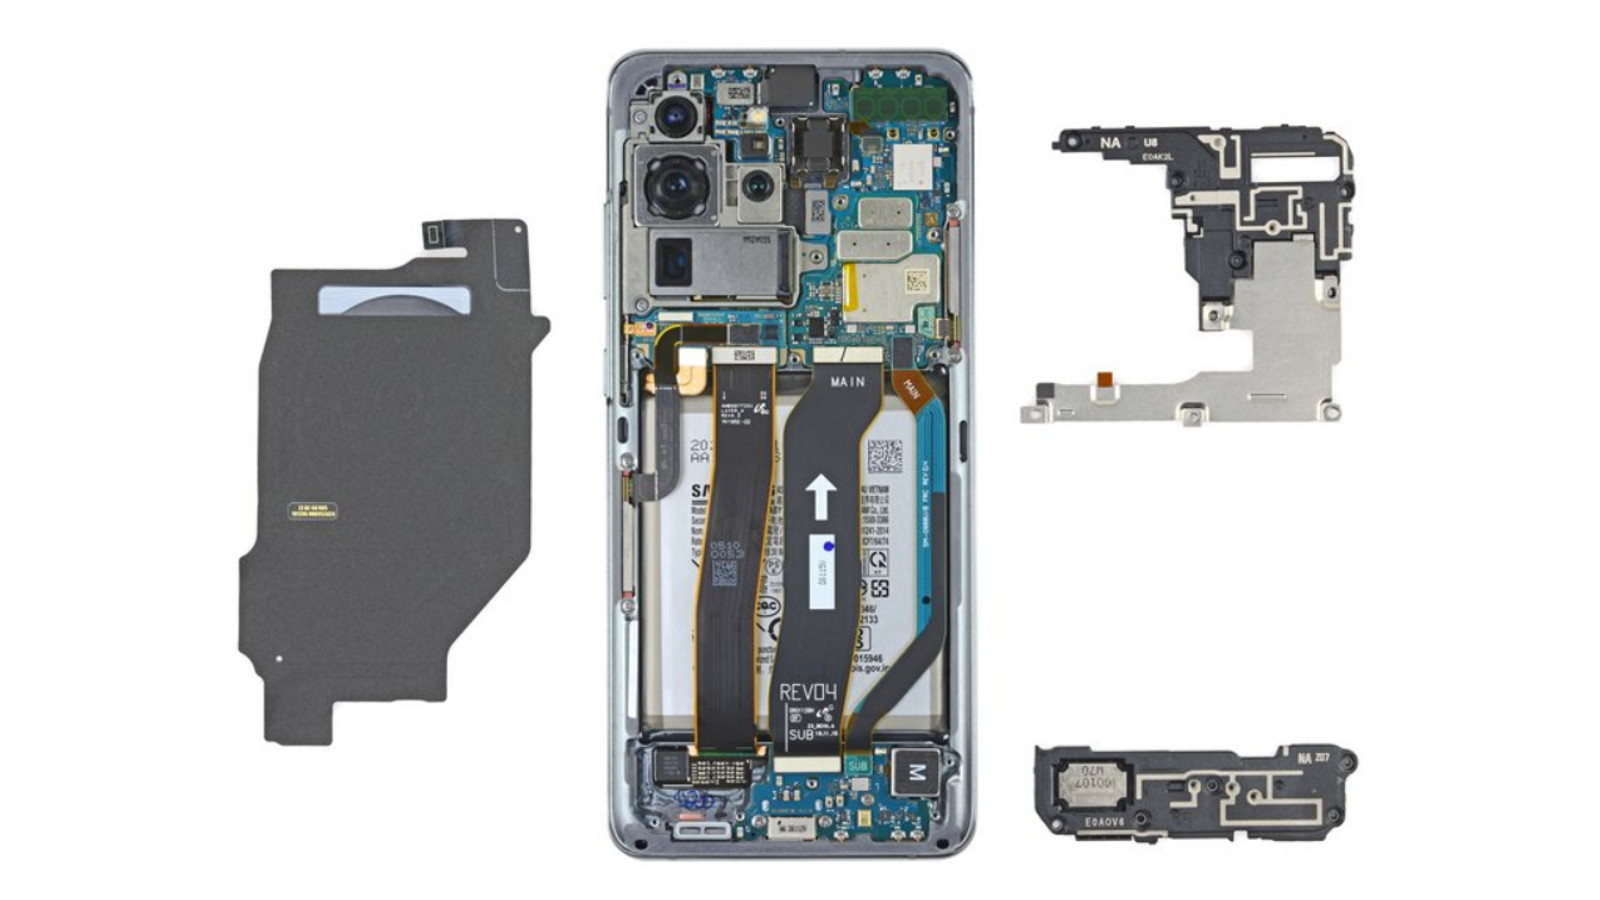 The Samsung Galaxy S20 Ultra teardown according to iFixit.